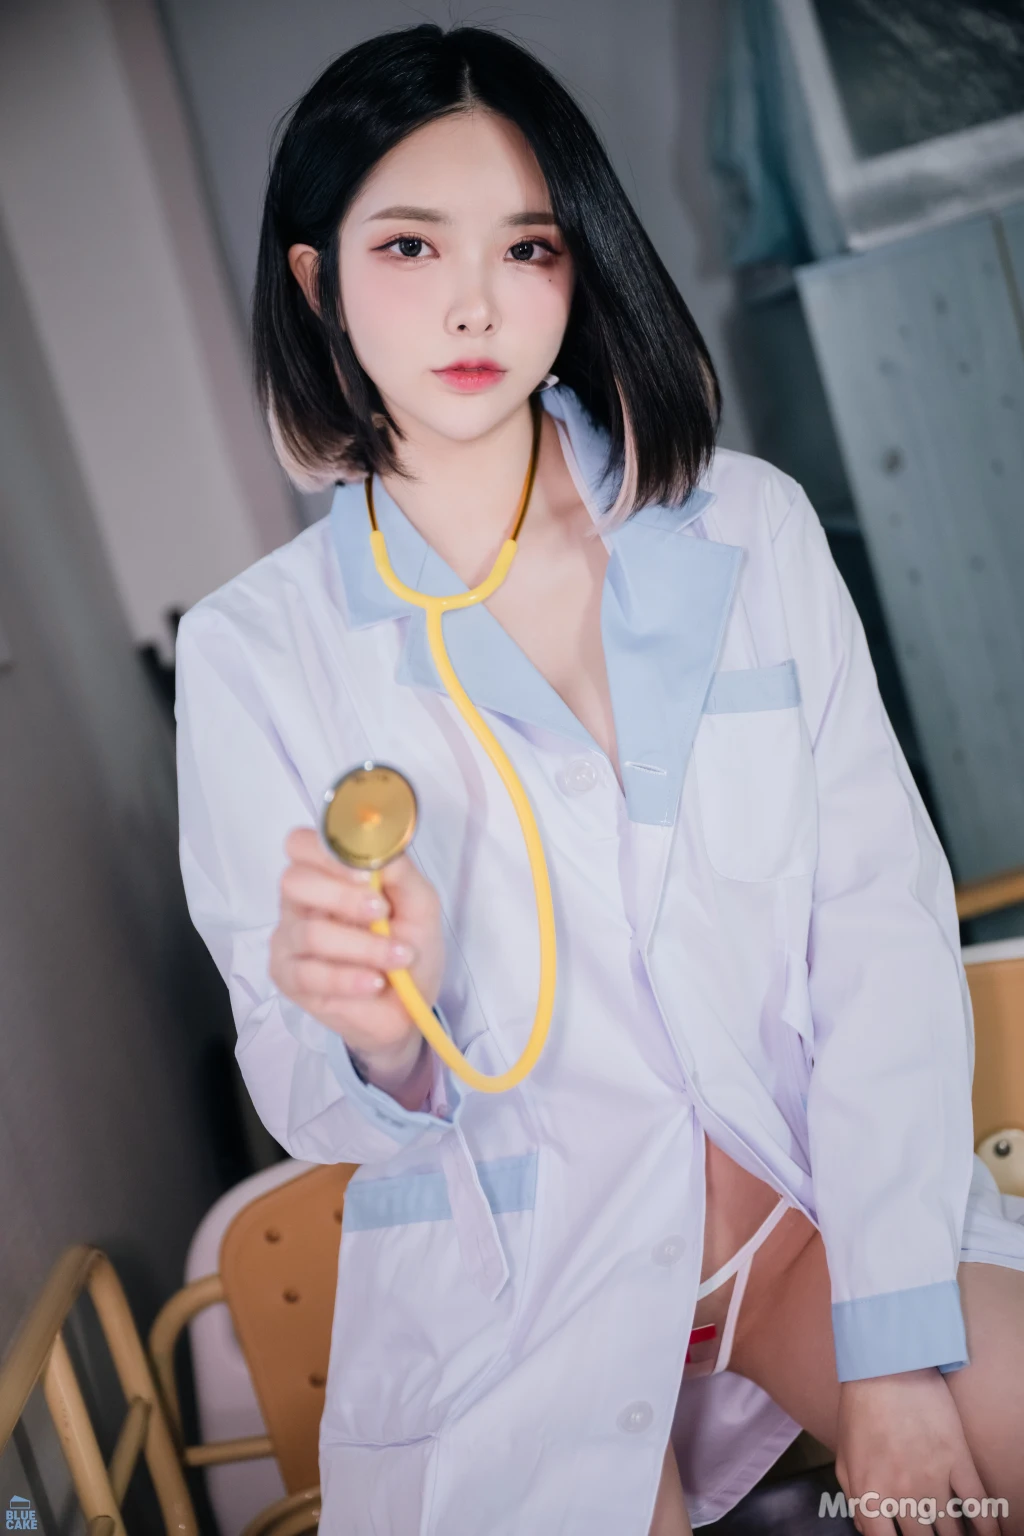 [BLUECAKE] Hikari: Vol.04 BAD DOCTOR Succubus (+RED.Ver) (149 photos)